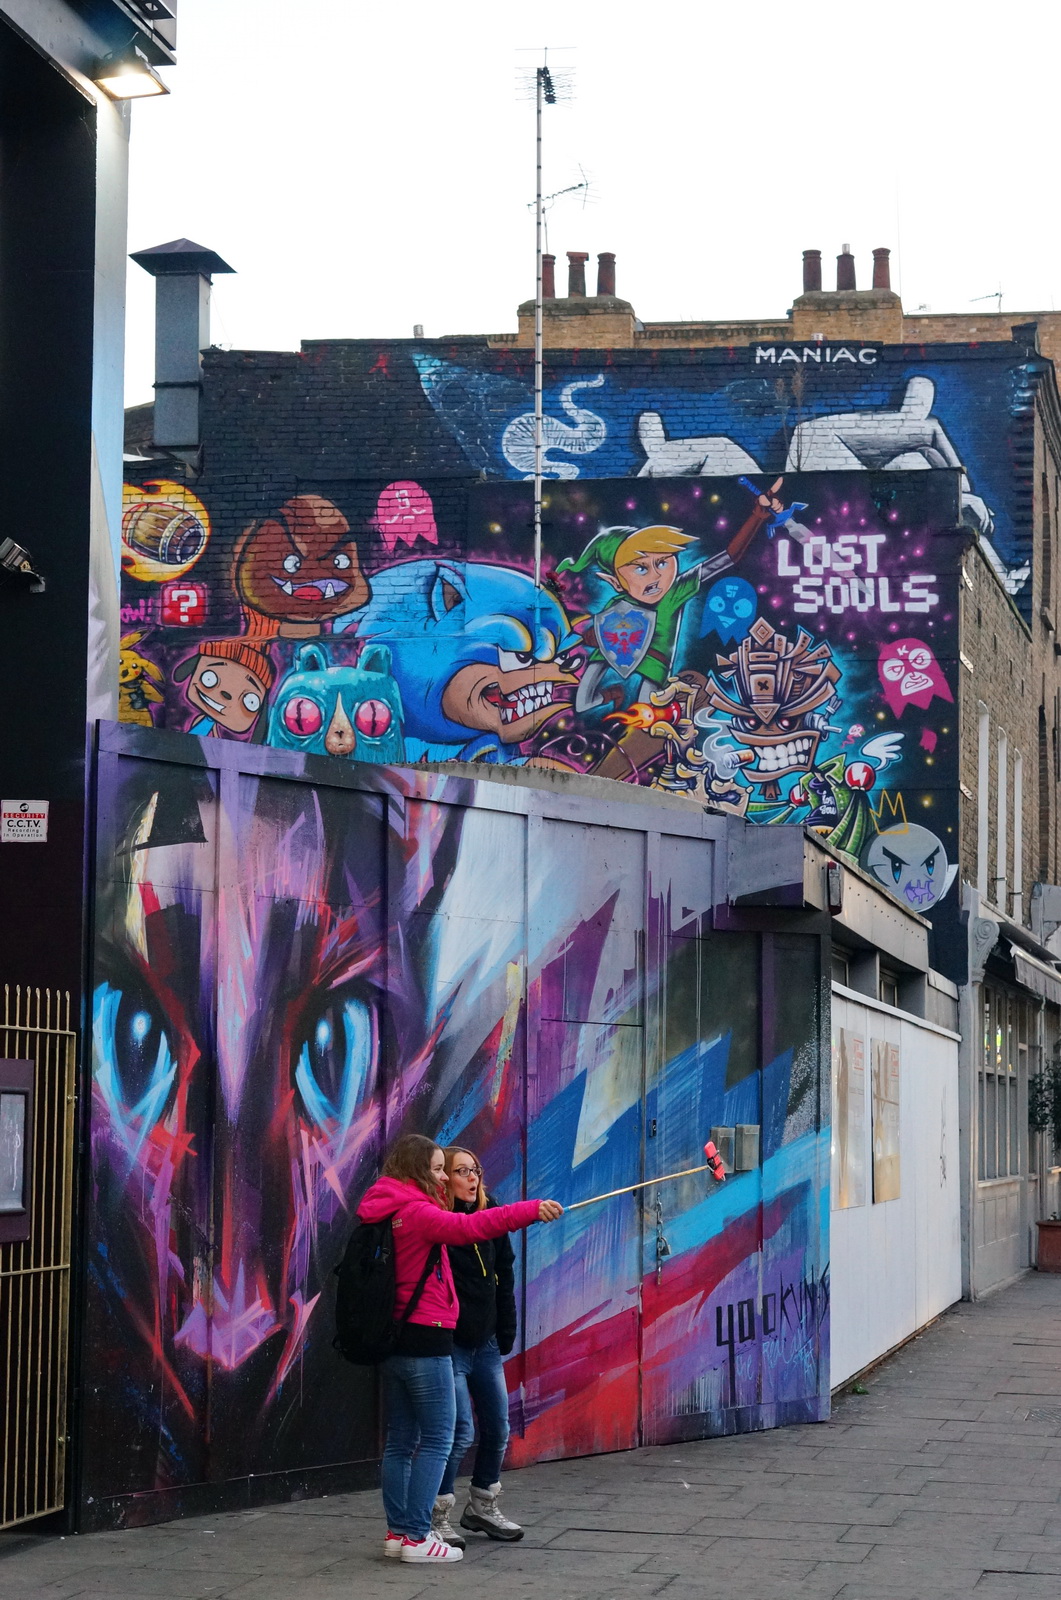 londres, london, street art londres, street art london, camden town, camden town street art, graffiti